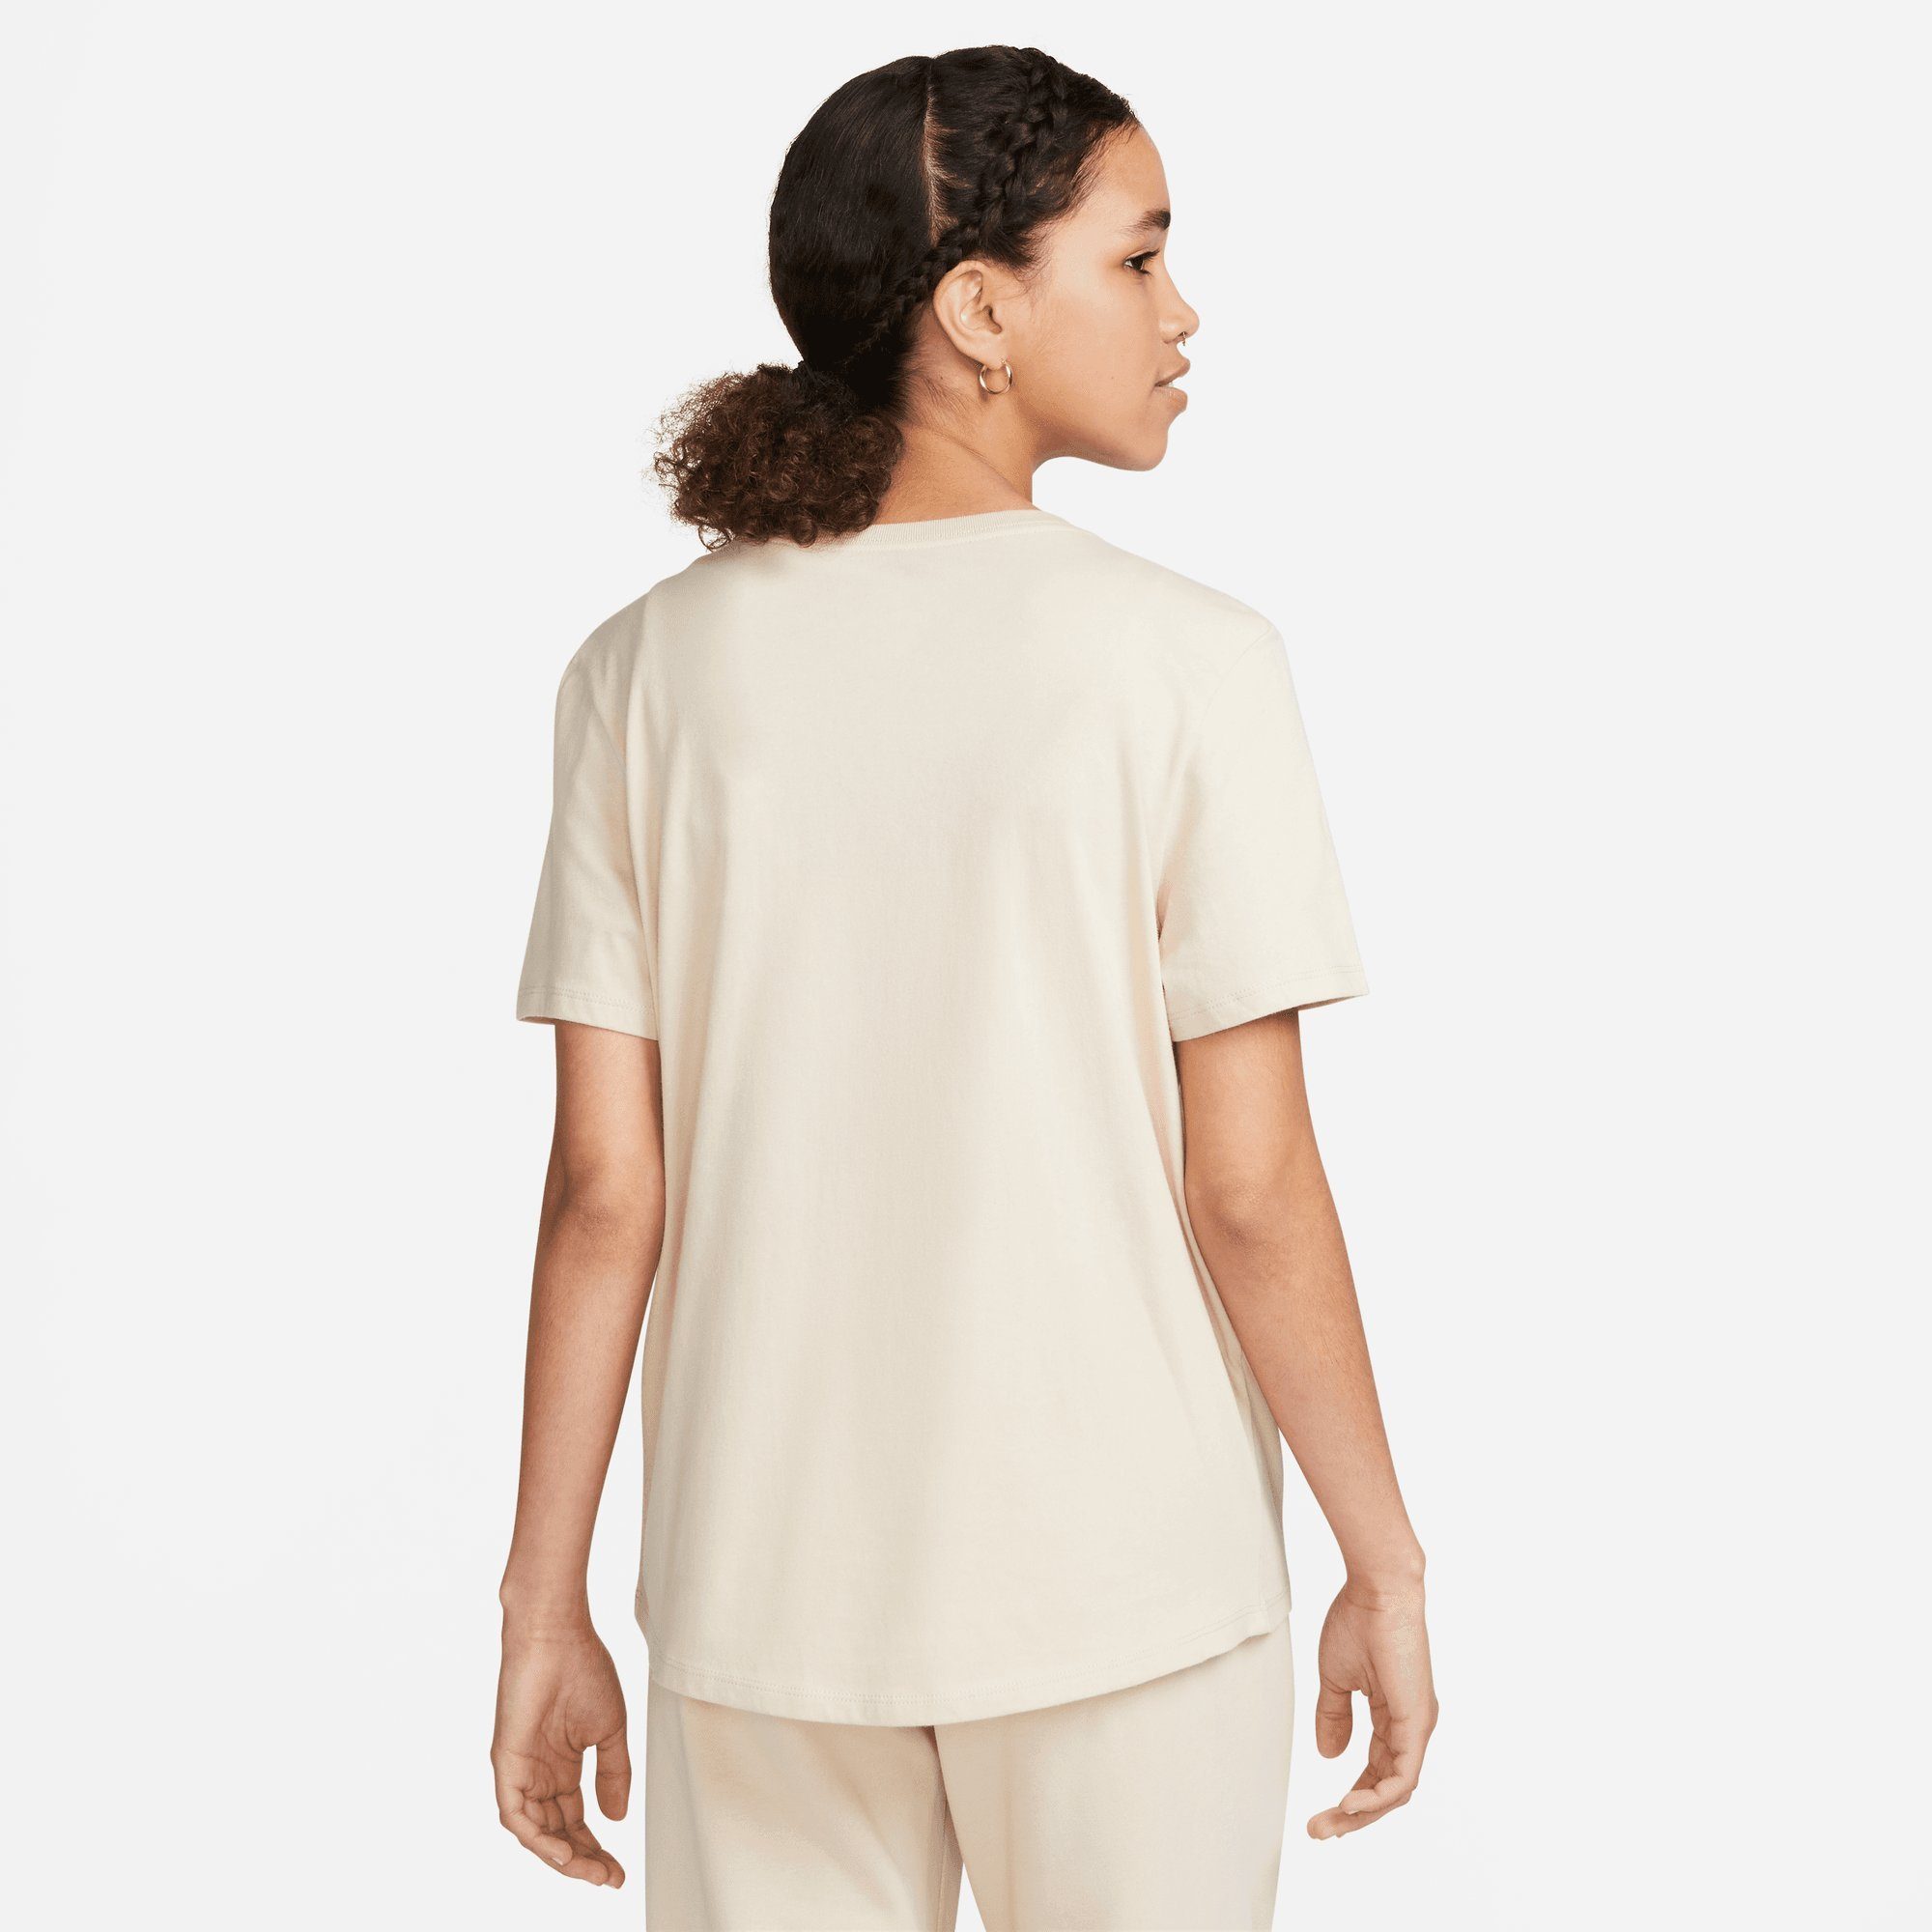 Nike SANDDRIFT/WHITE ESSENTIALS T-Shirt WOMEN'S Sportswear T-SHIRT LOGO